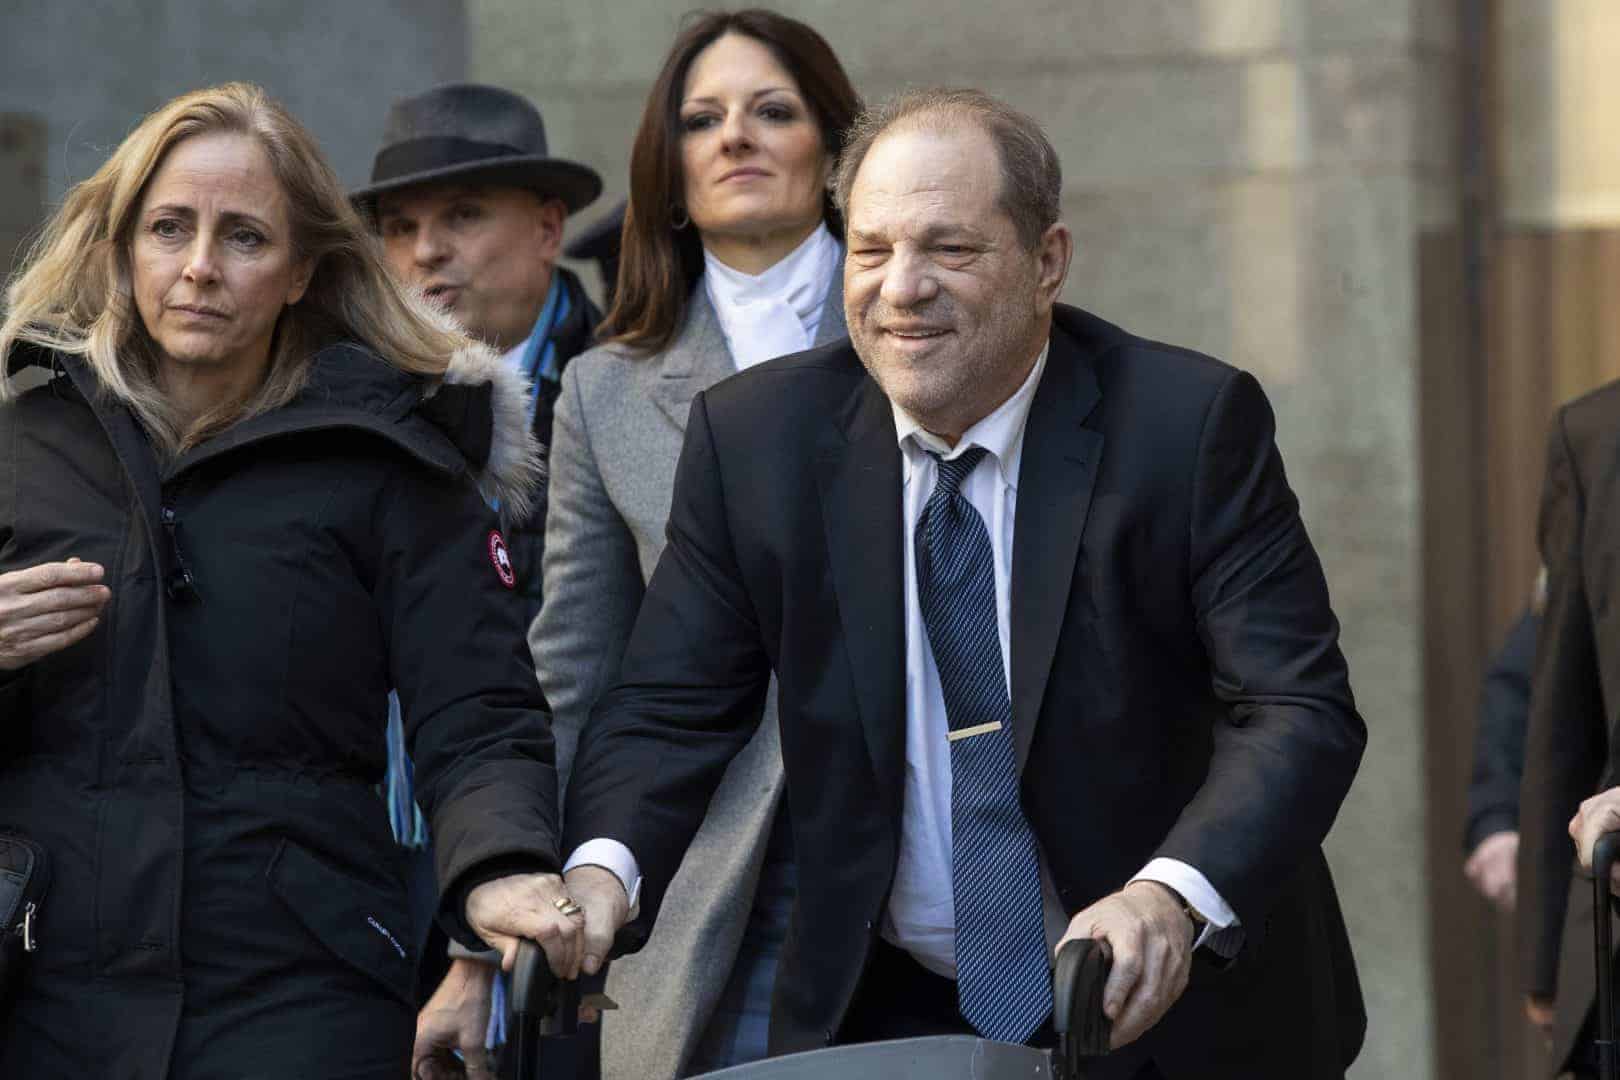 Harvey Weinstein given lengthy jail term